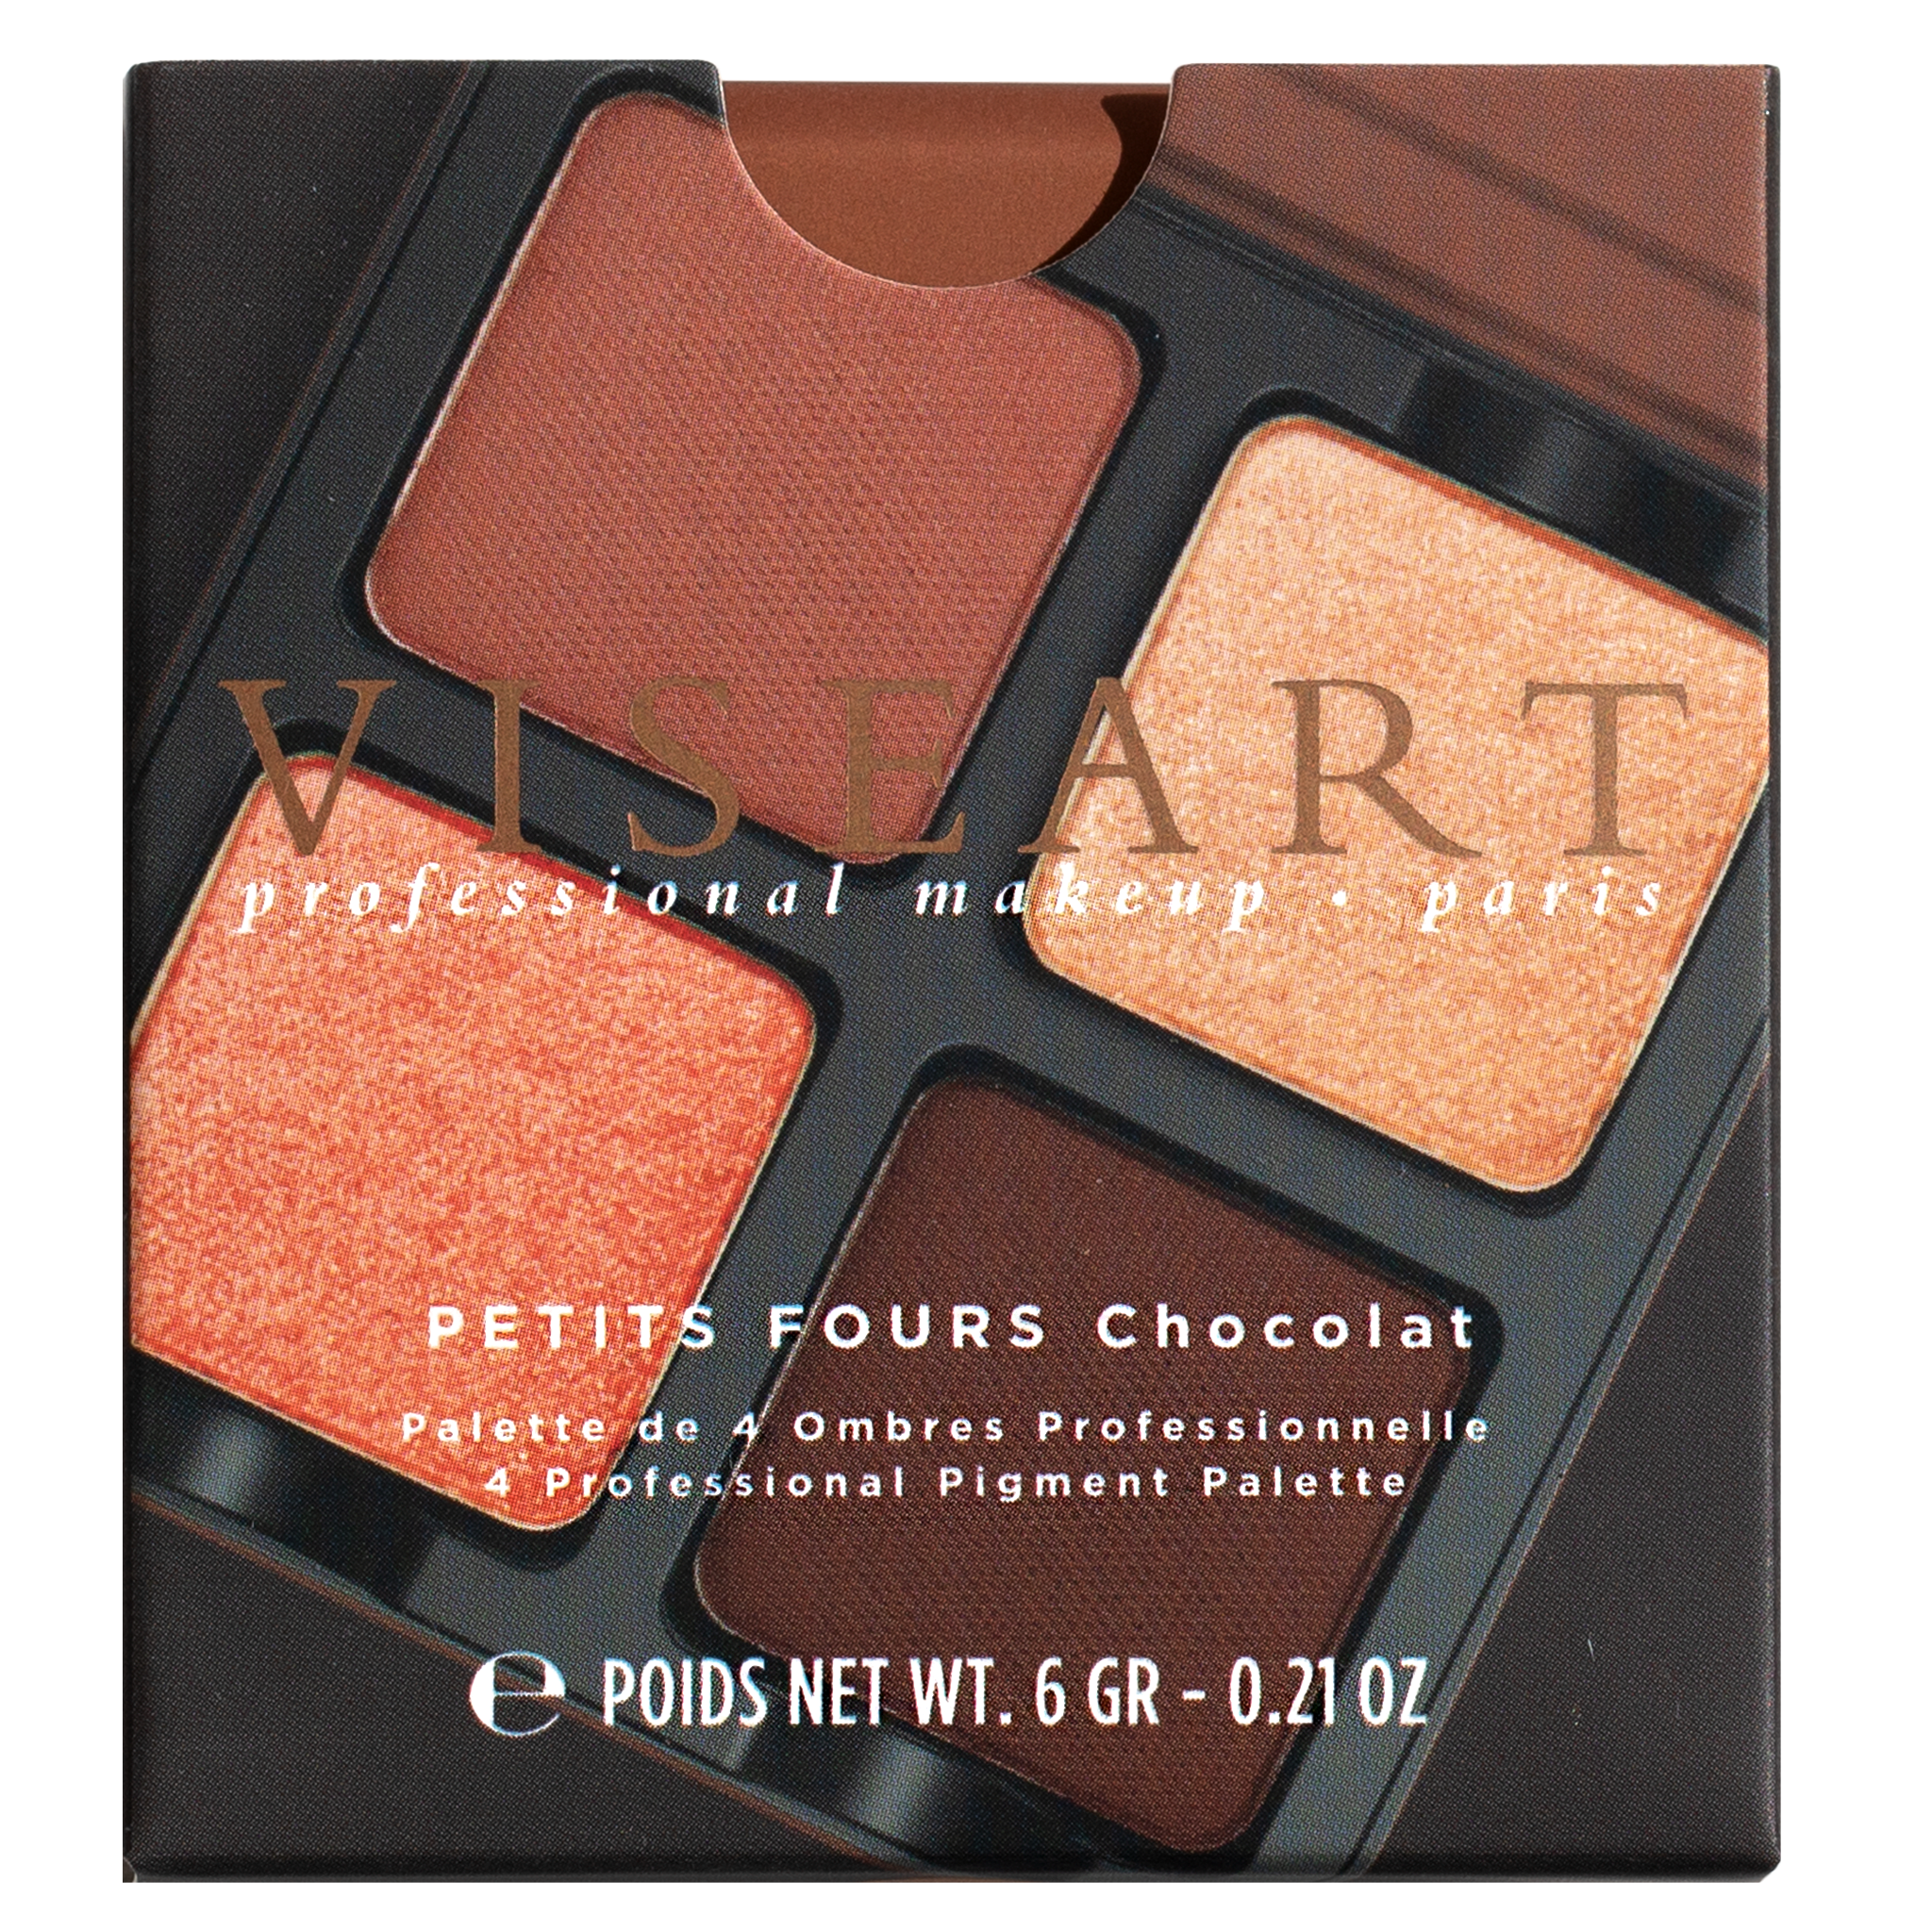 Viseart Paris Petits Fours Chocolat Eyeshadow Palette Carton